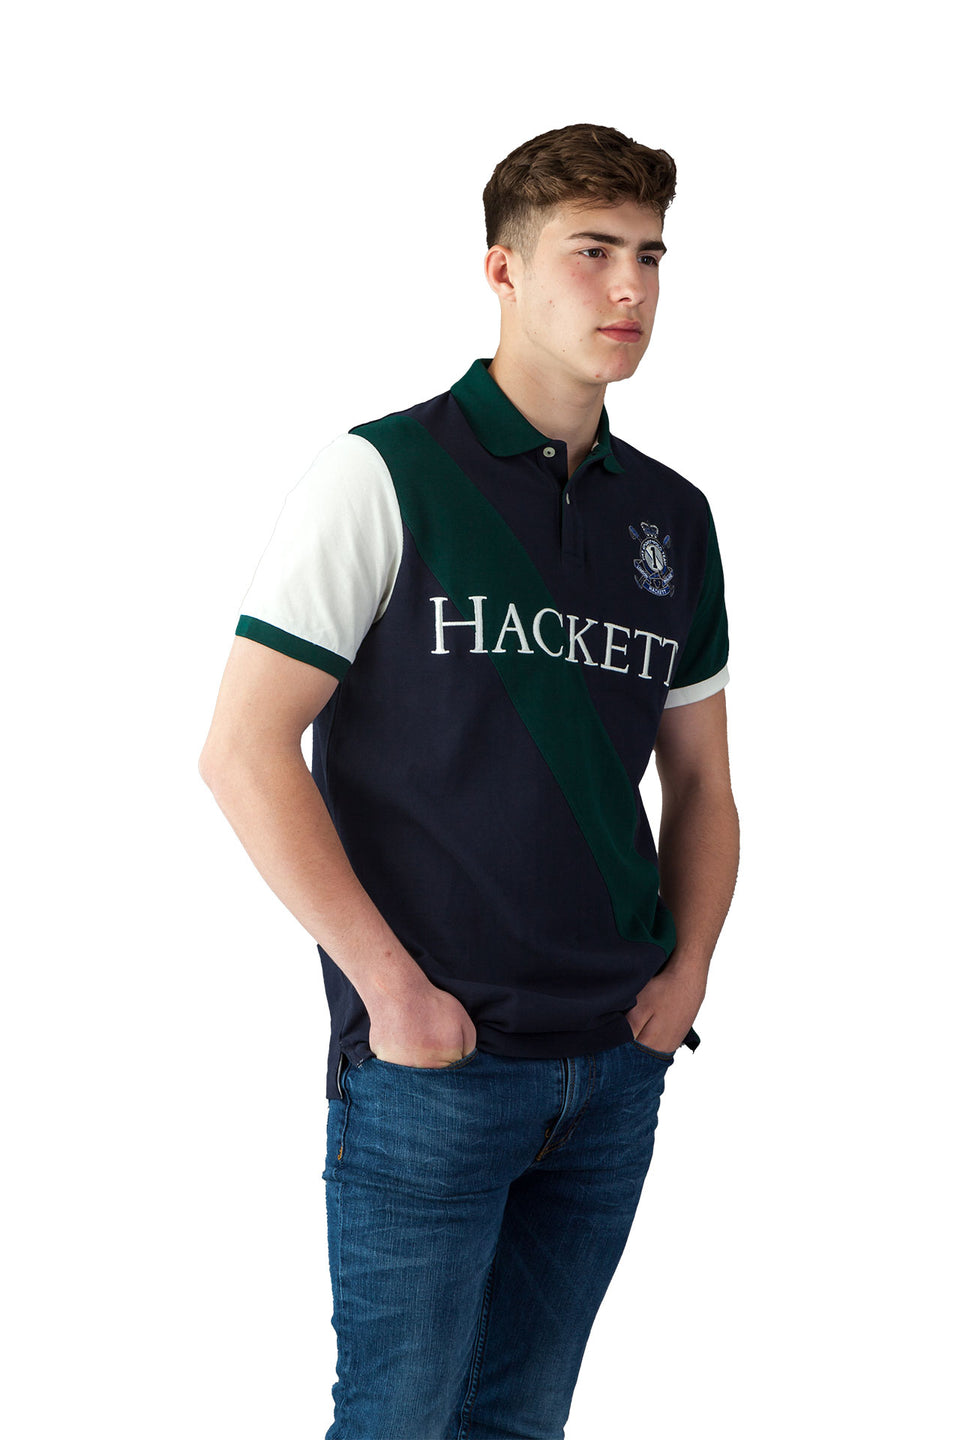 Hackett Sash Polo Navy And Green Shirt - Camden Connaught